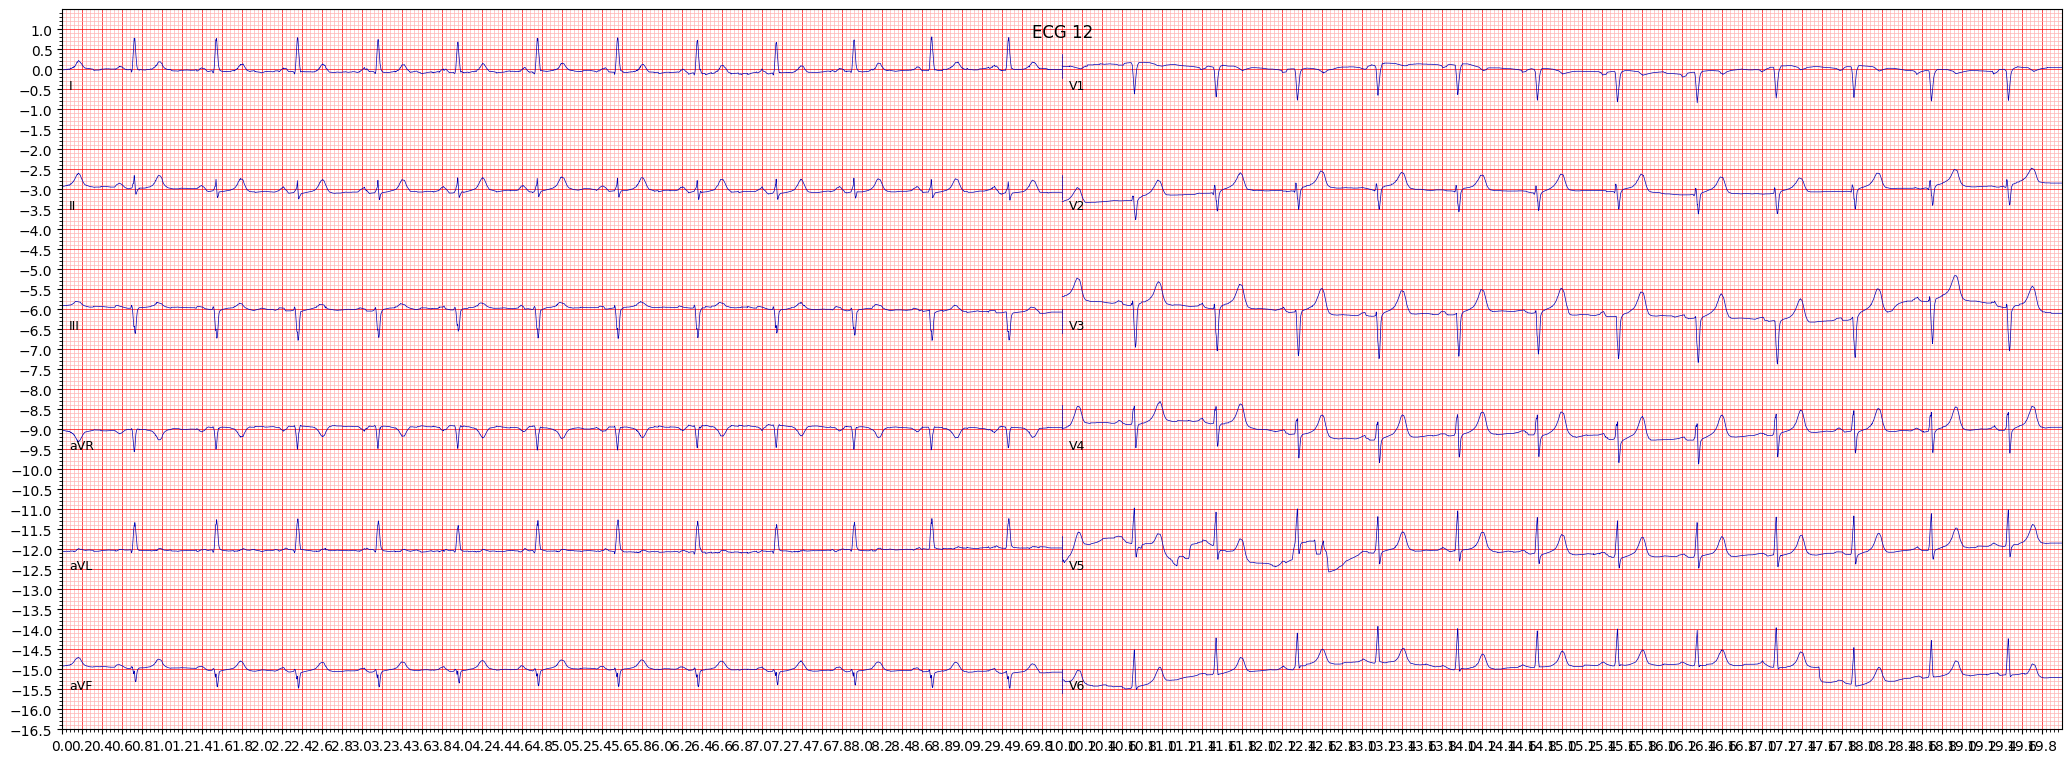 anteroseptal myocardial infarction (ASMI) example 2676